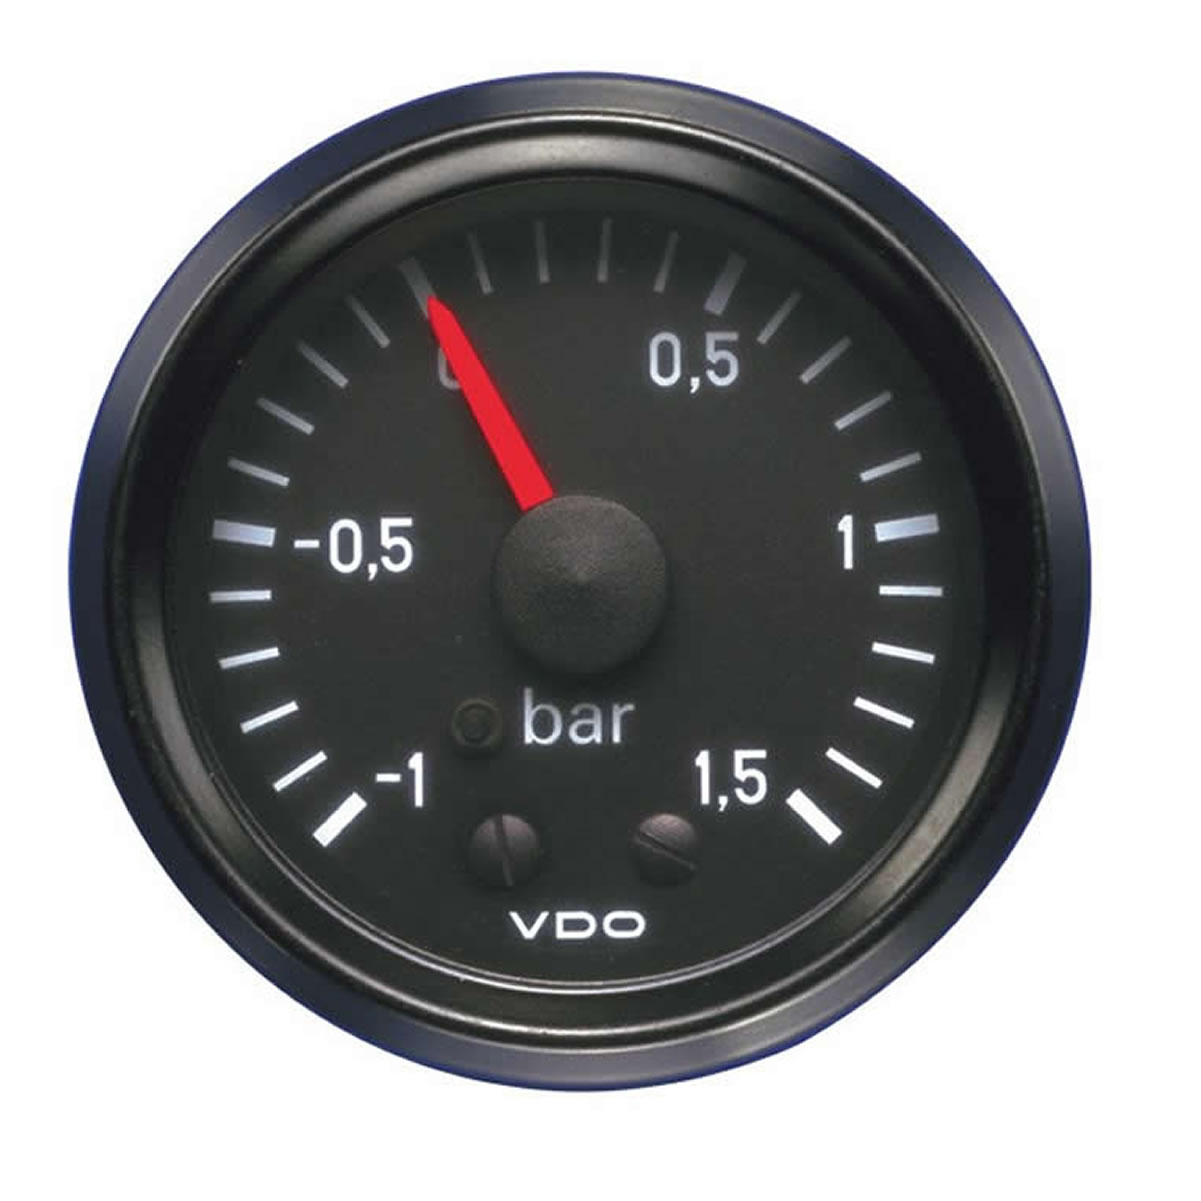 VDO Pressure gauge -1 tot 1-5Bar